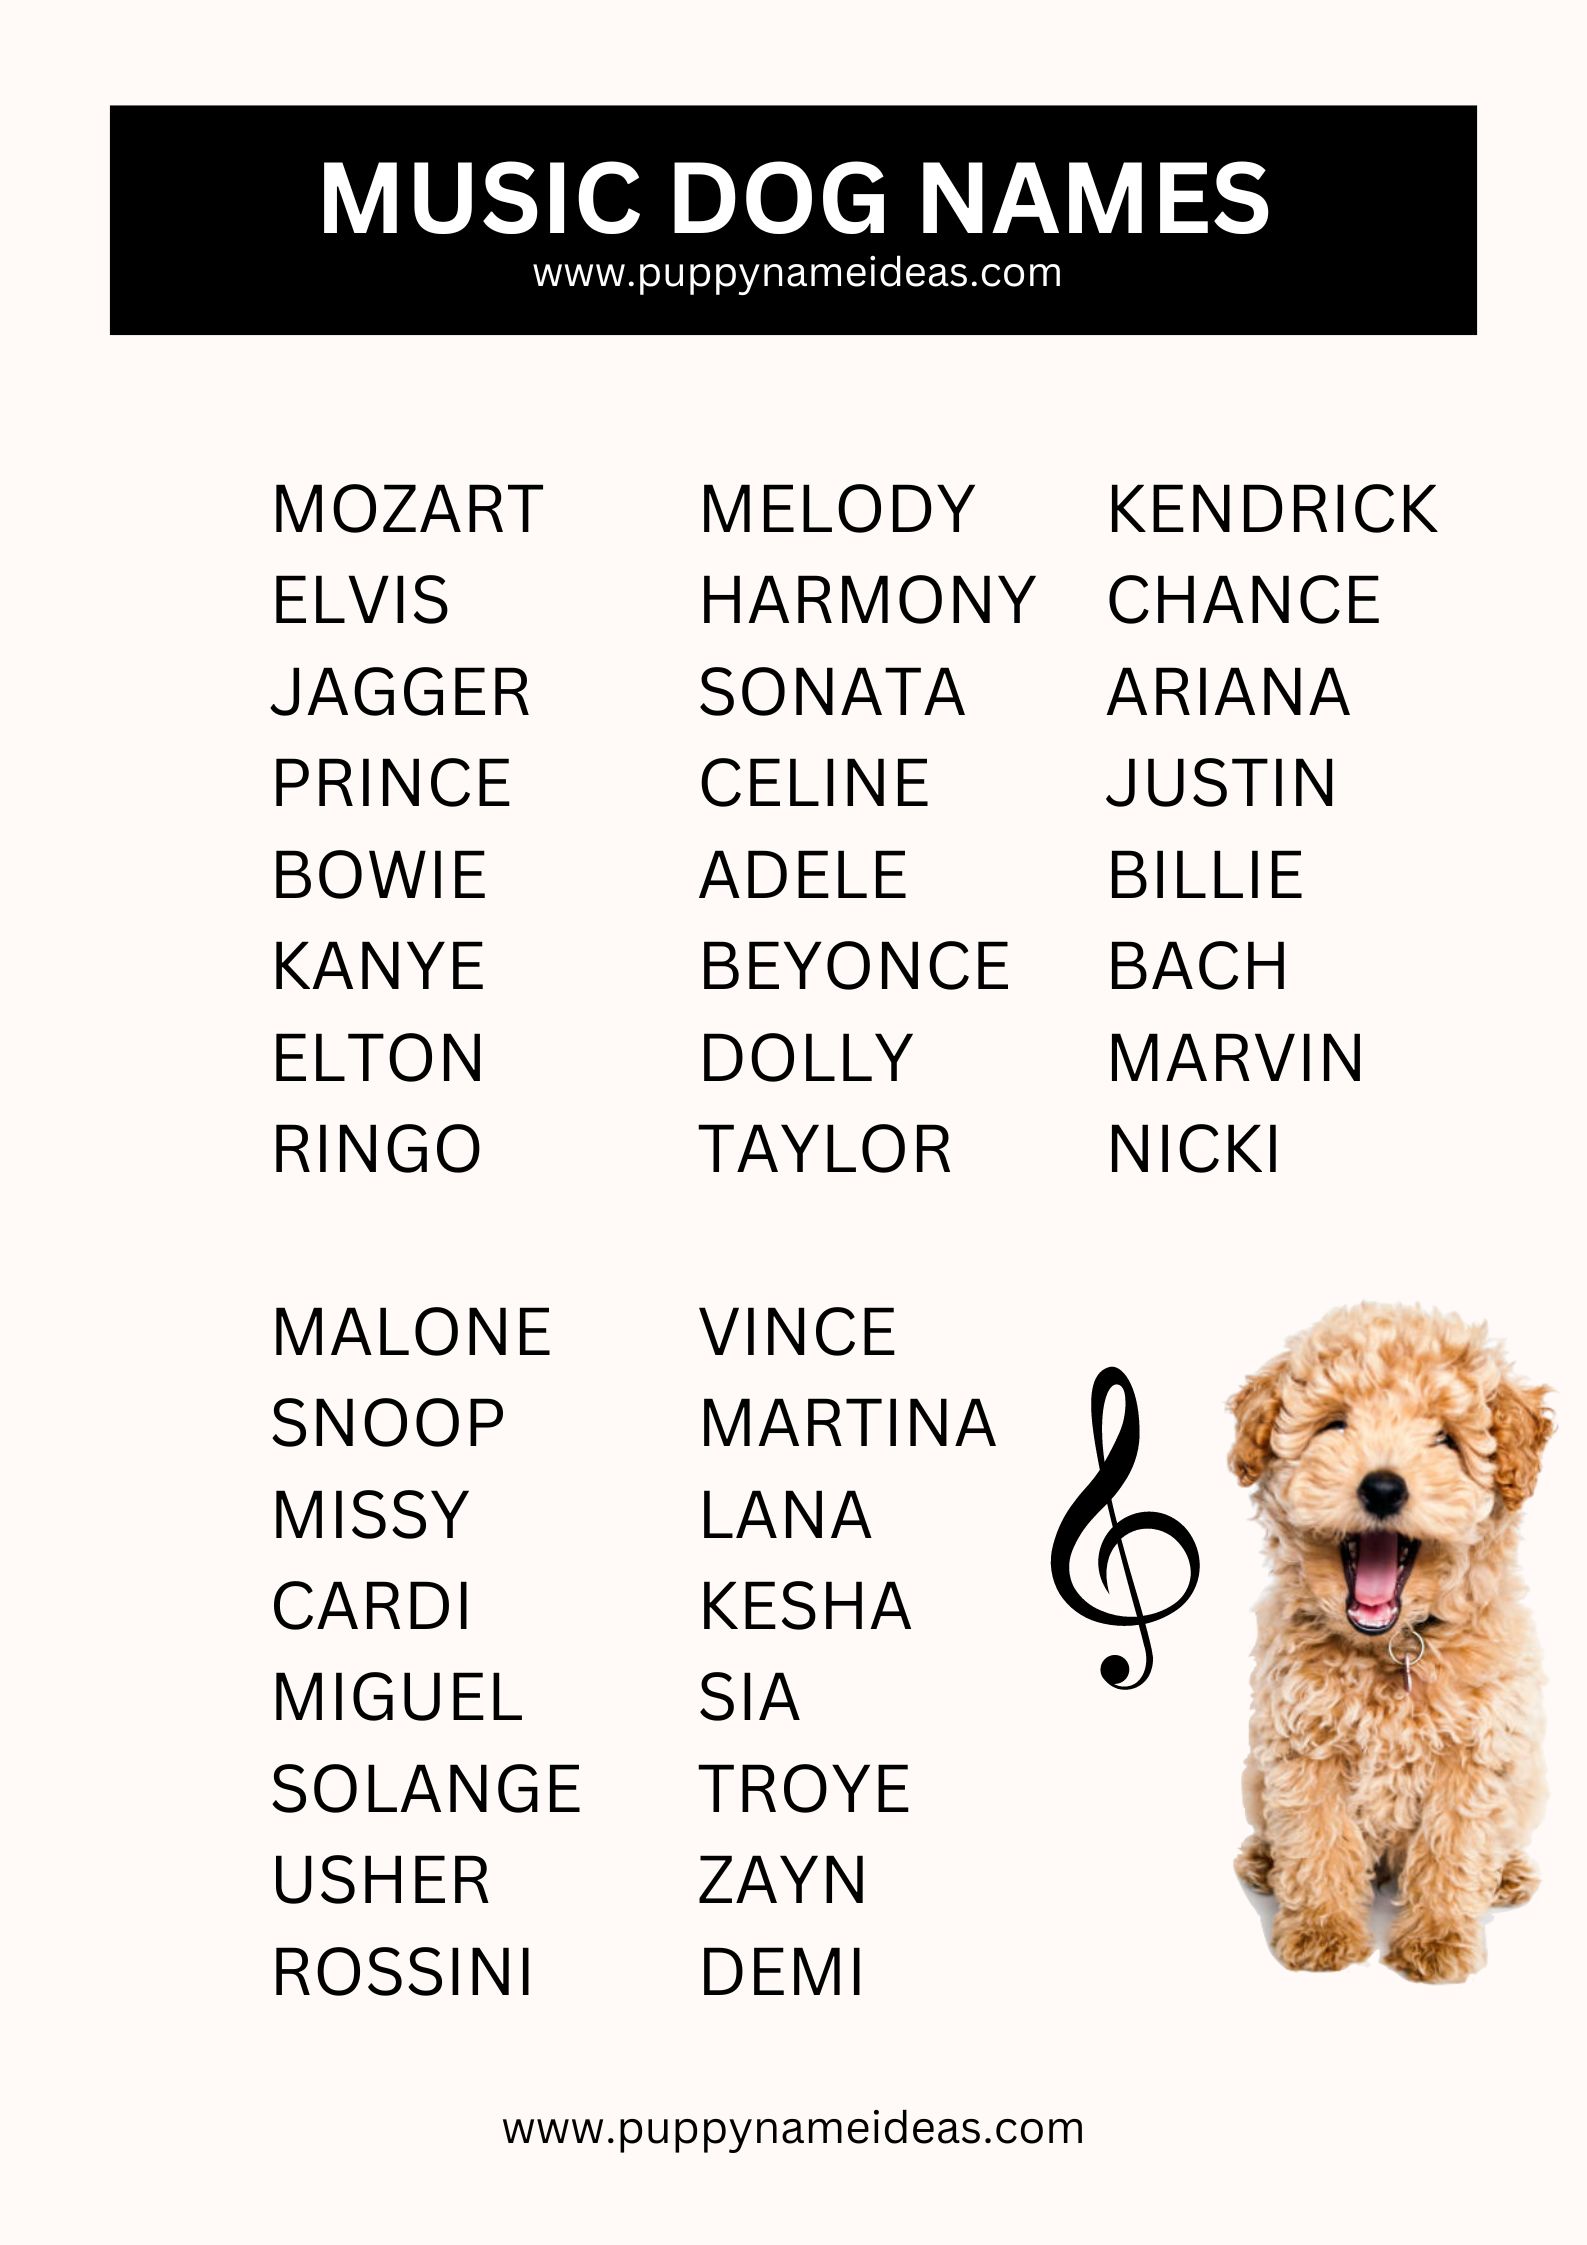 List Of Music Dog Names